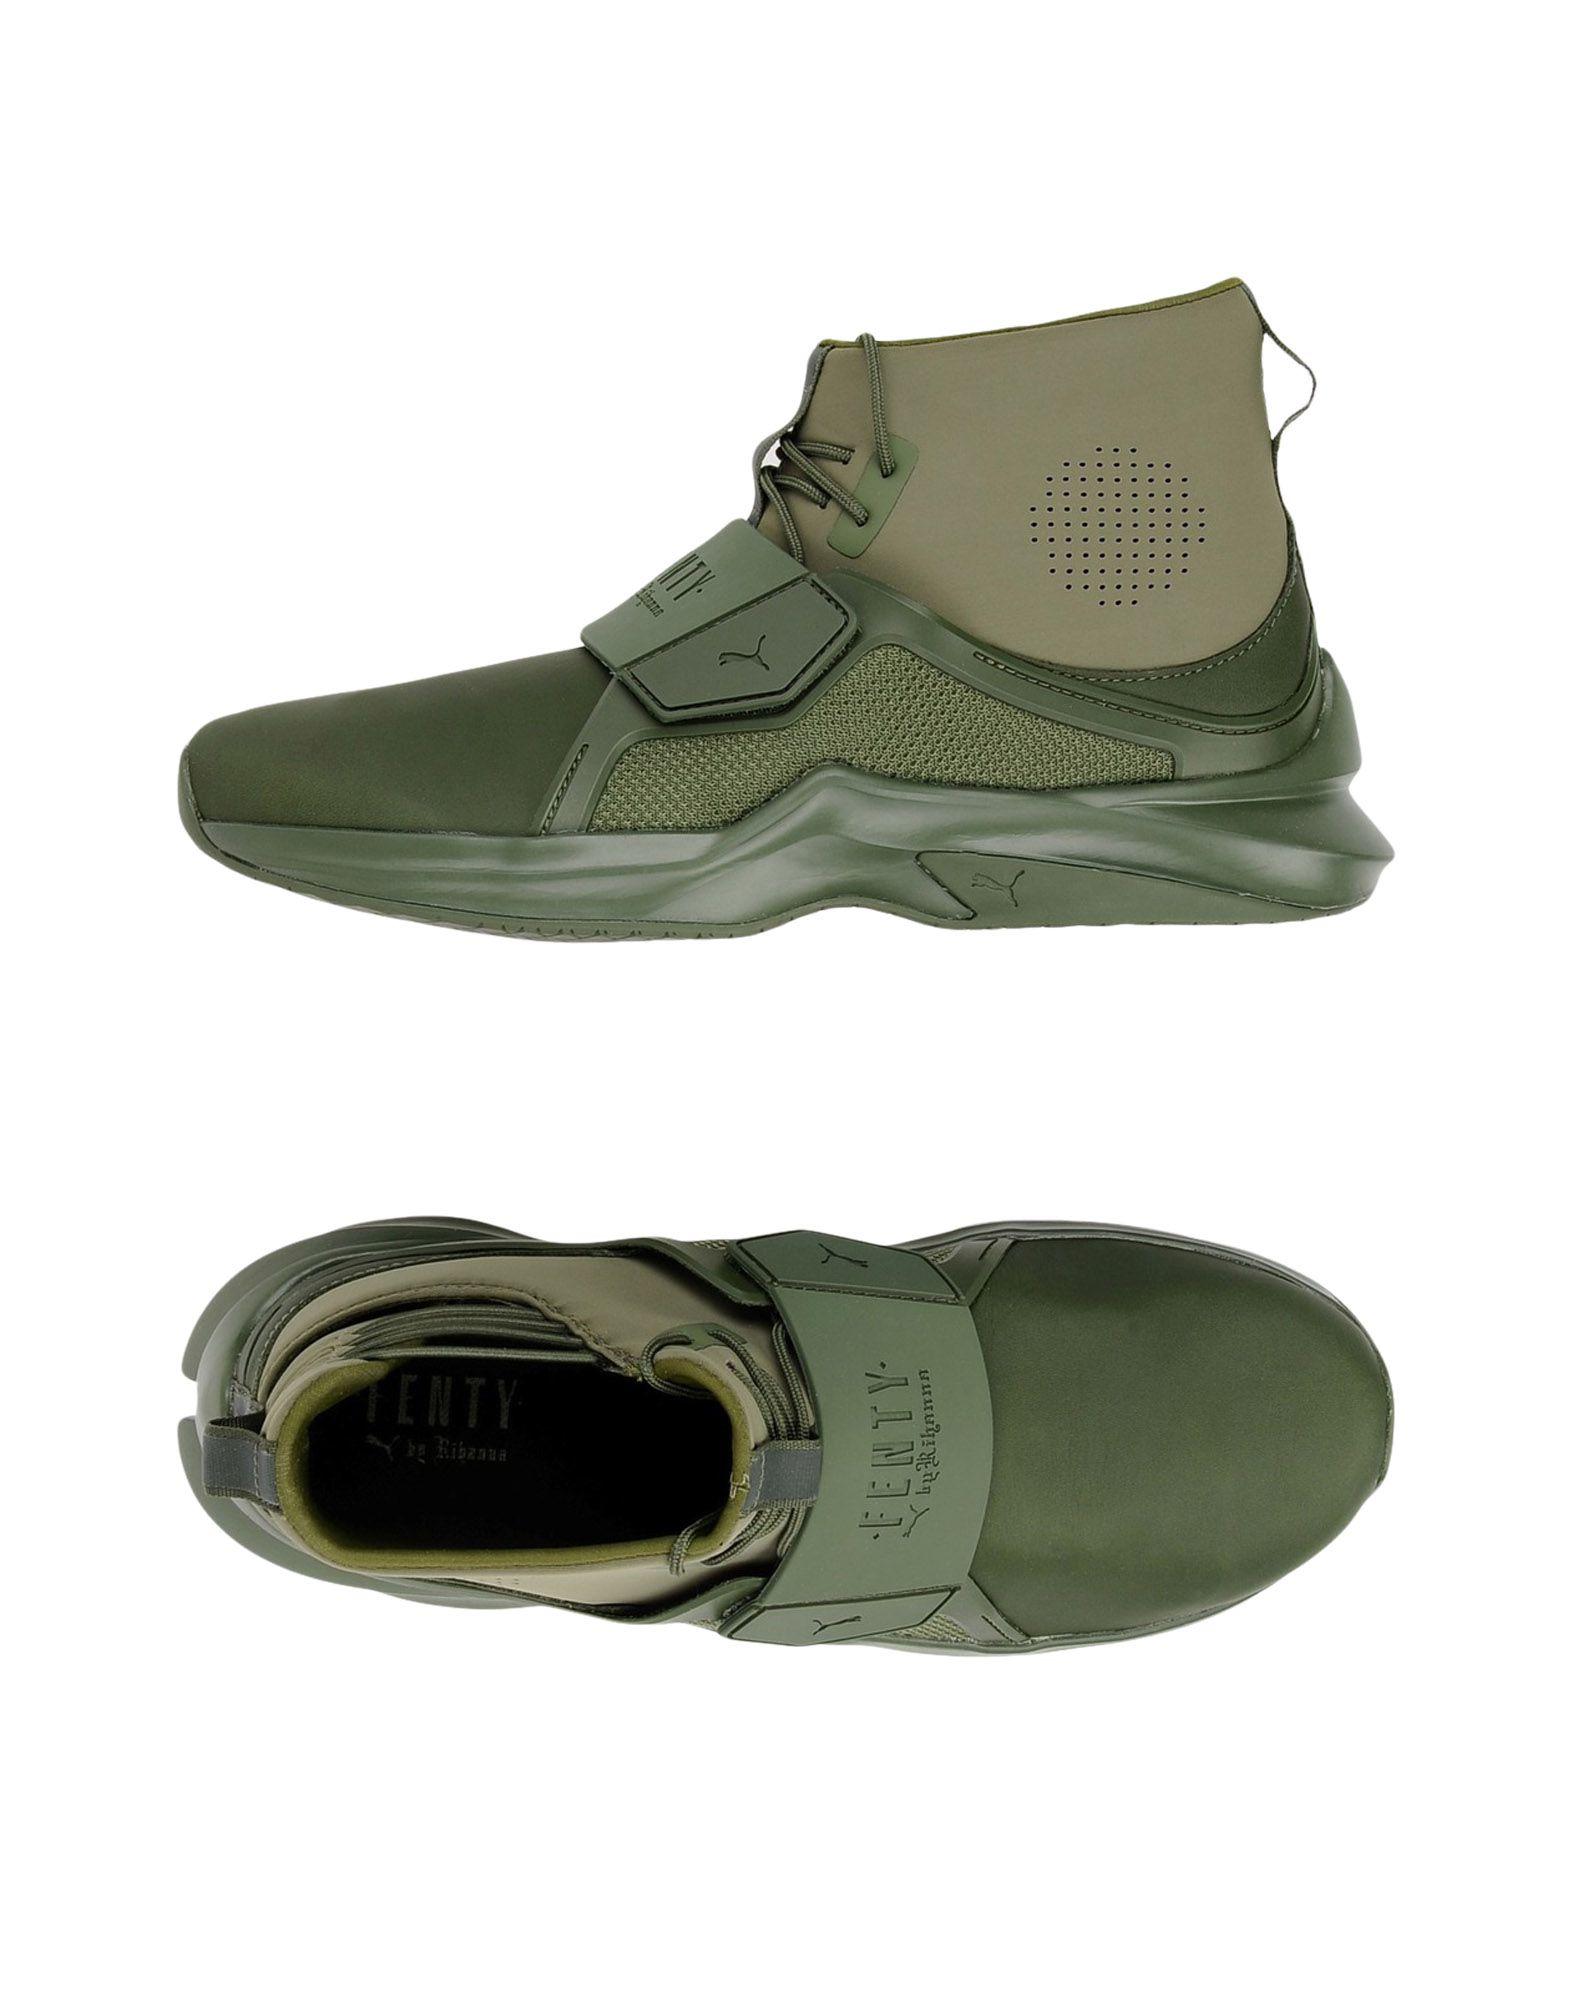 green puma sneakers